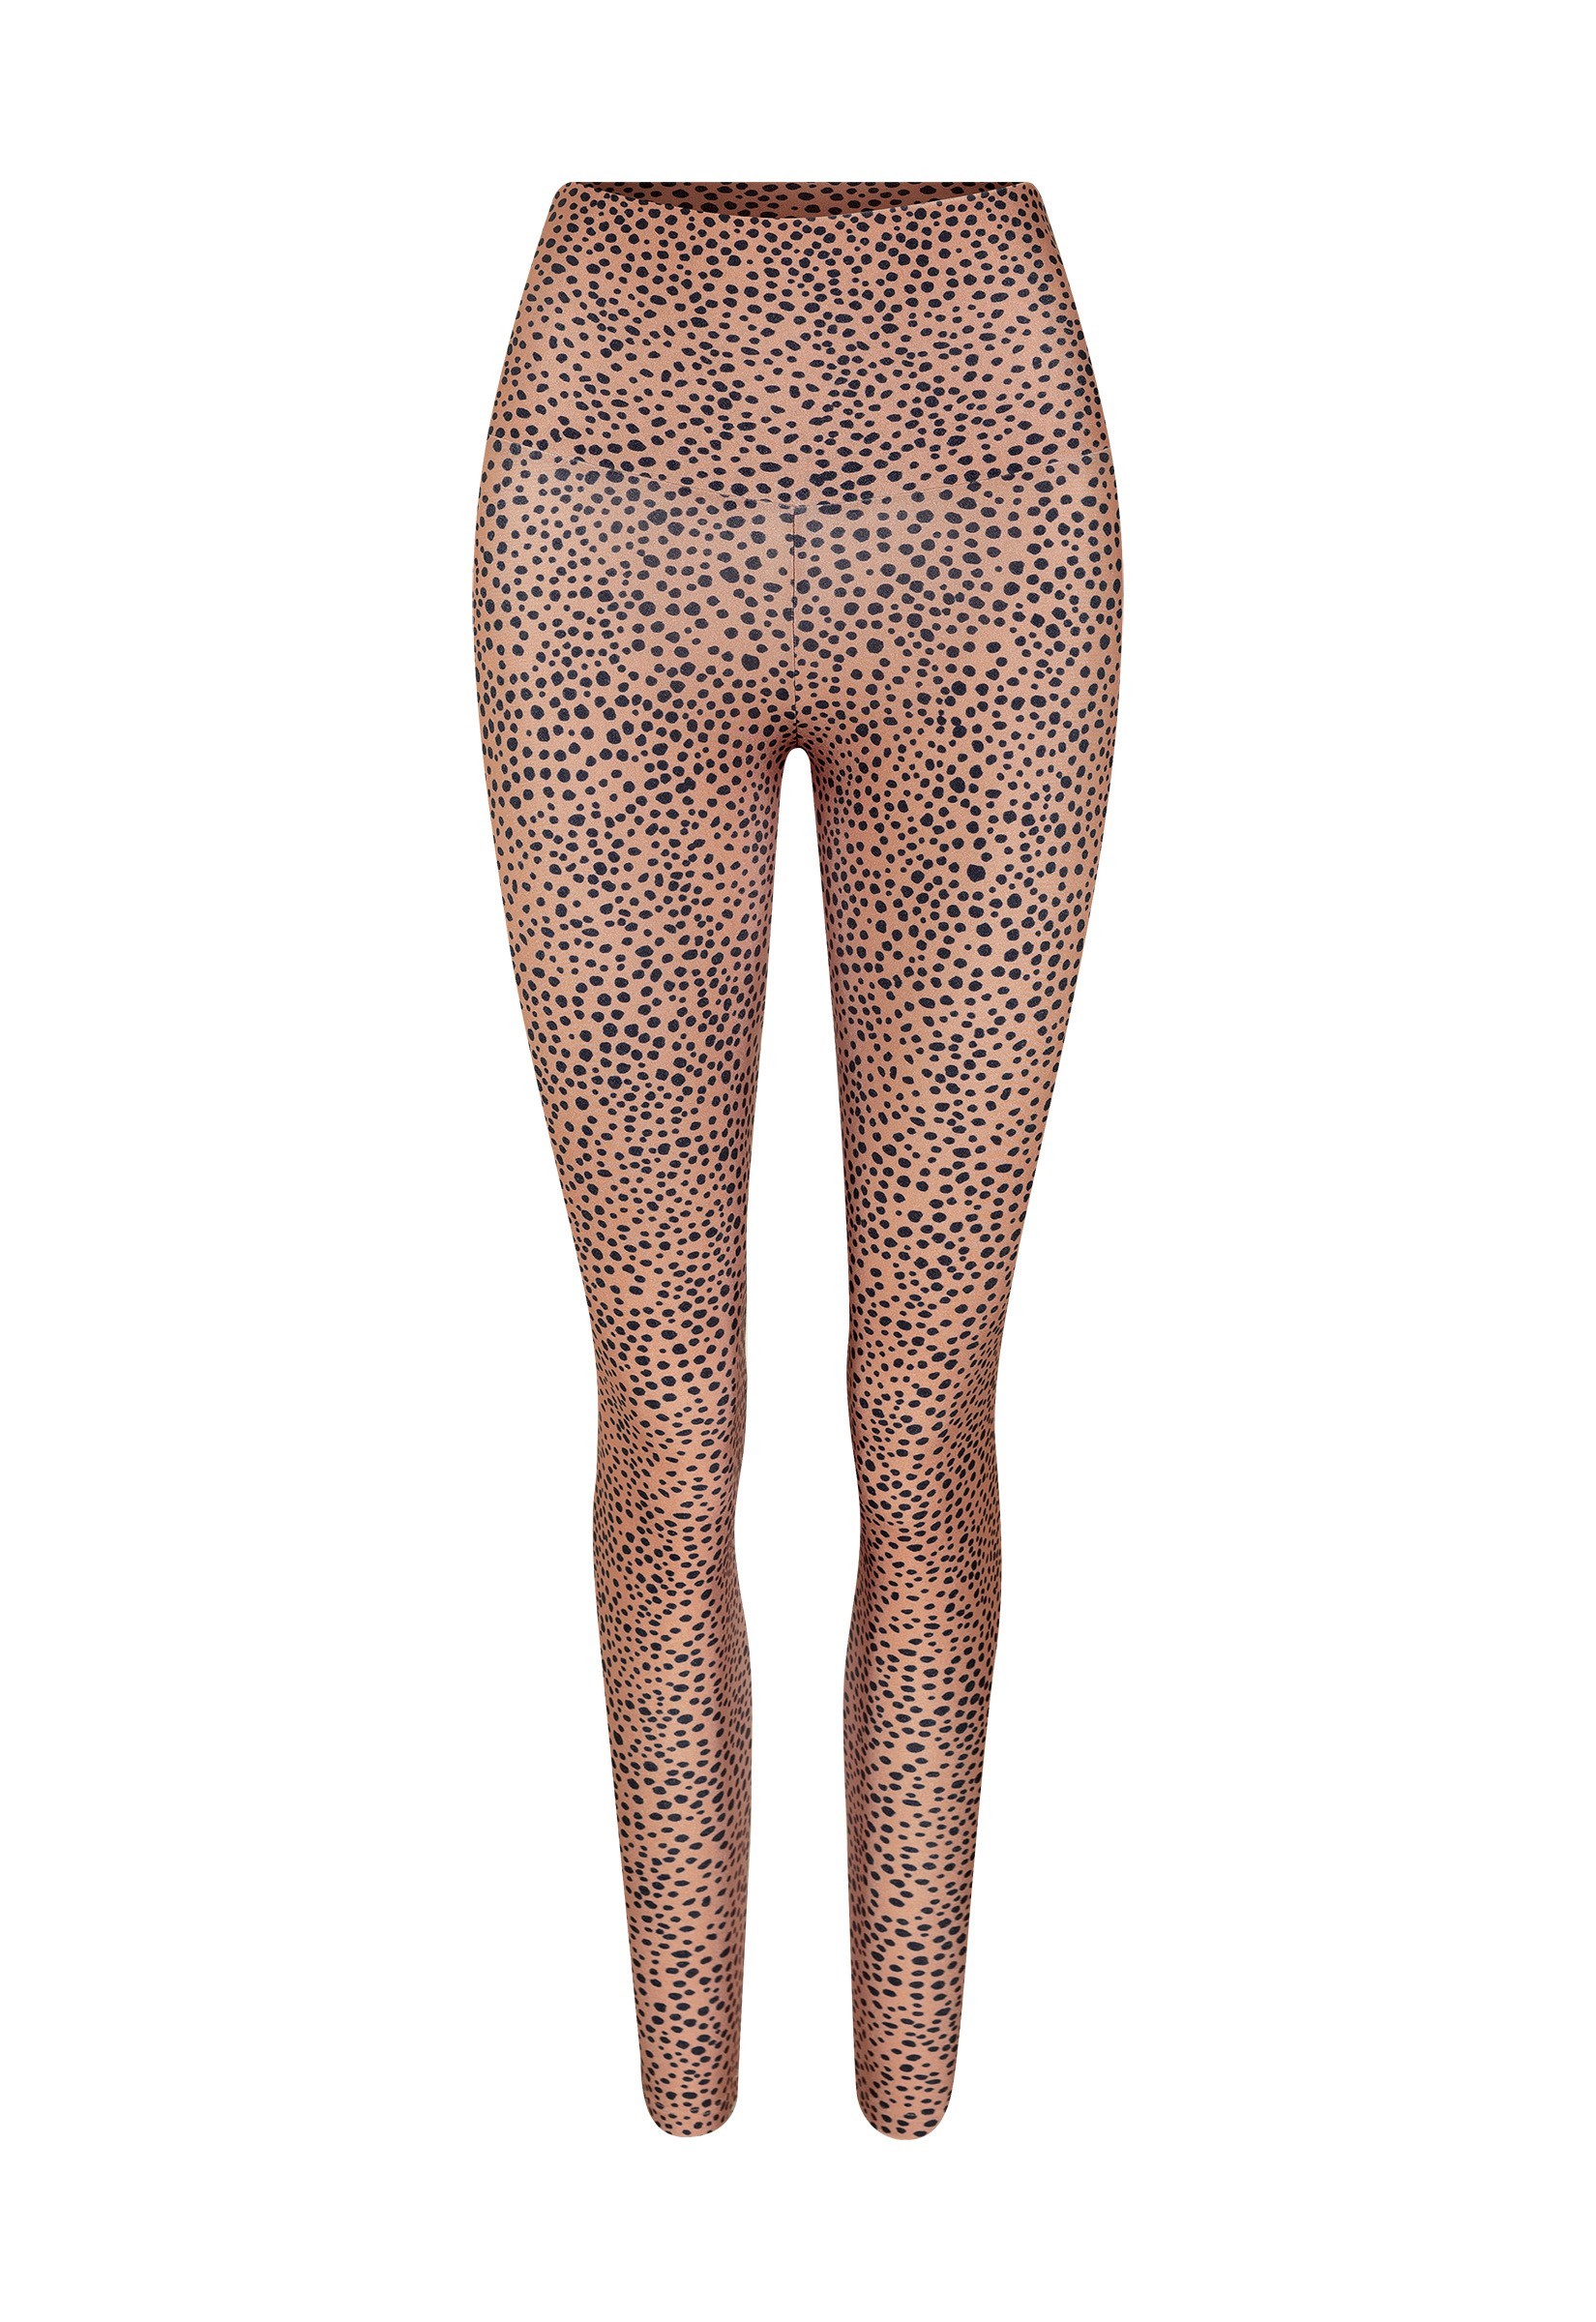 Legging Lycra Cheetah Bege - Fitlegs